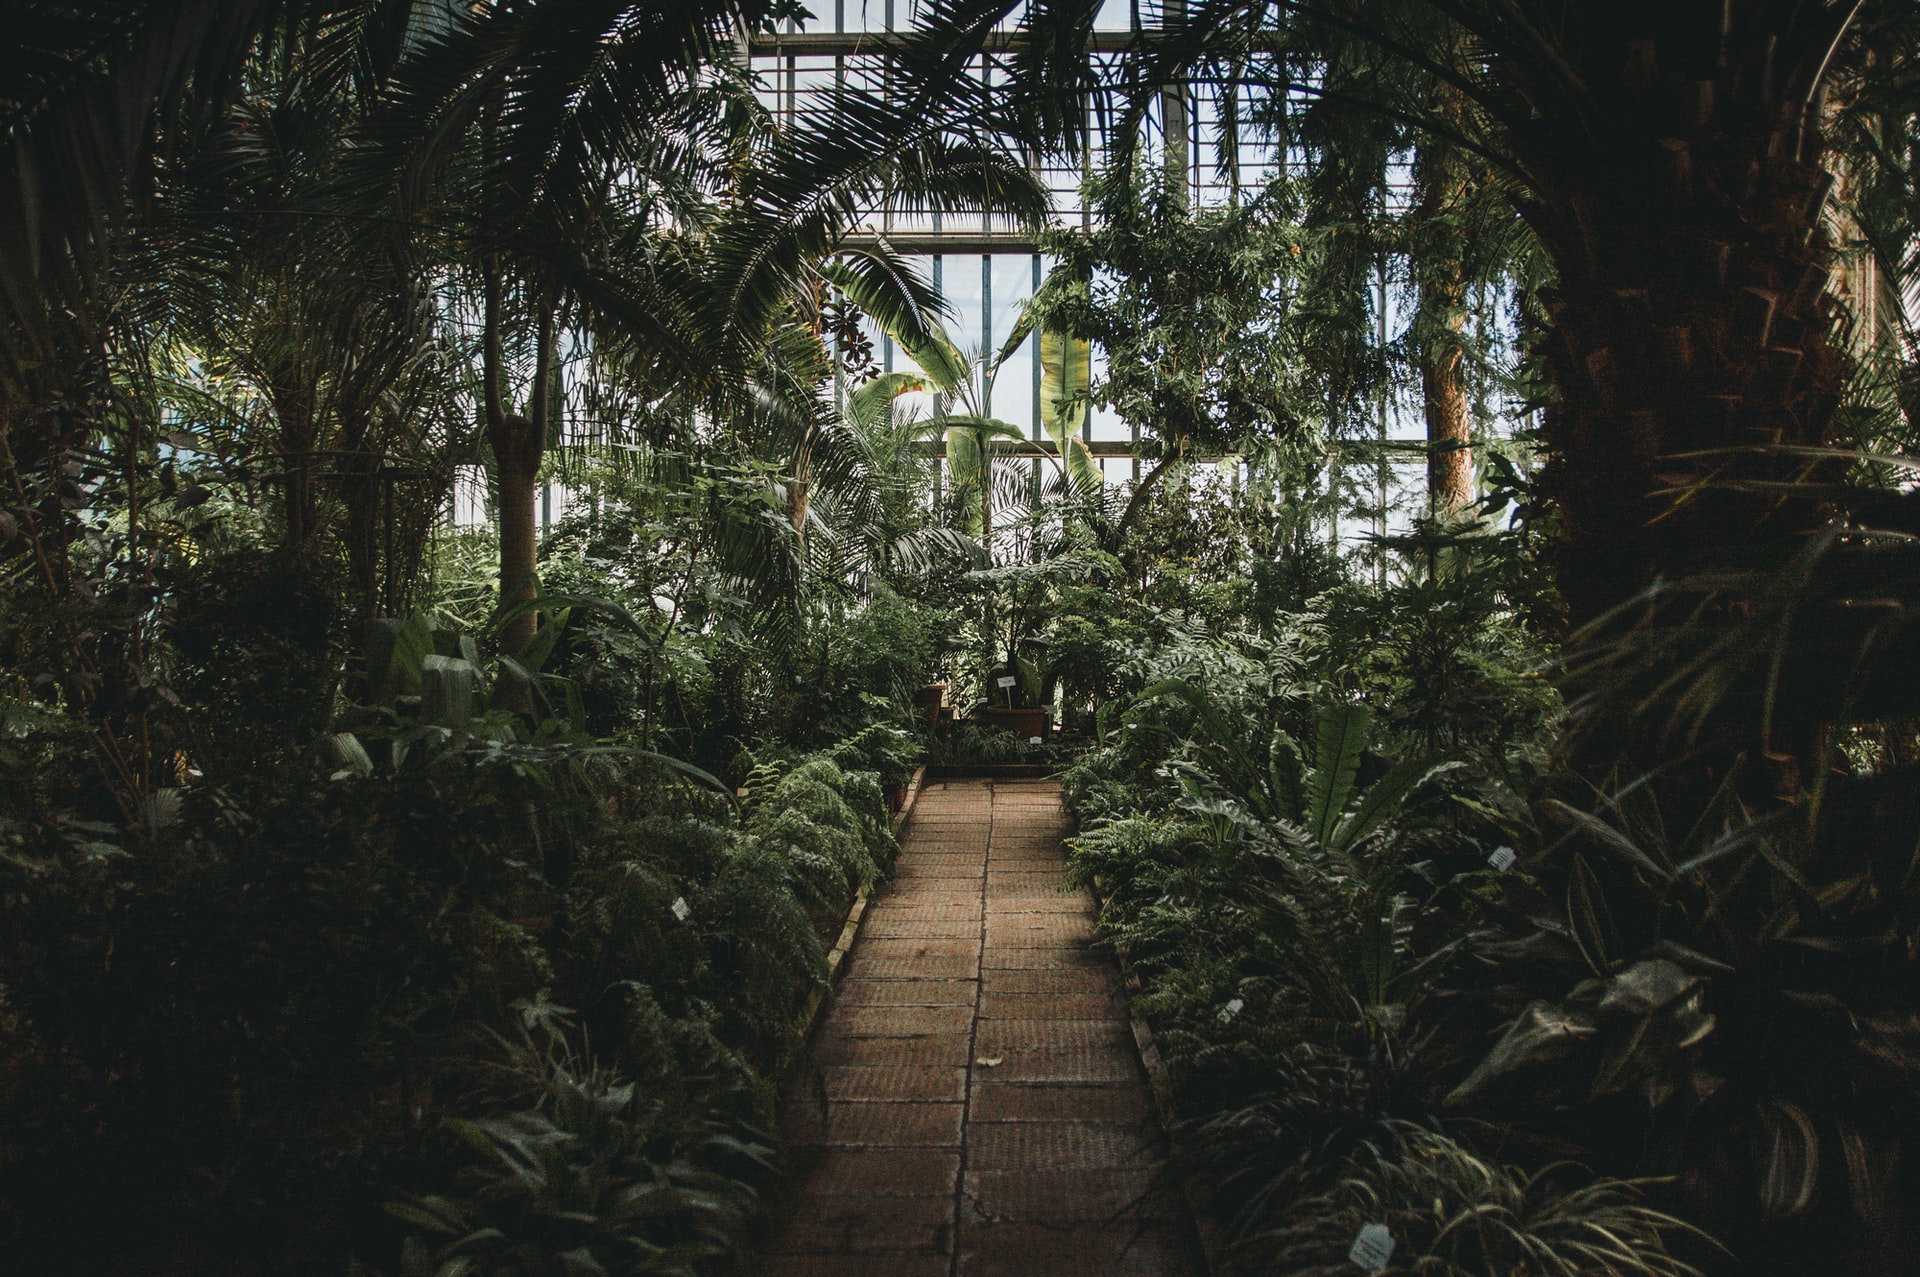 Interior shot of tropical greenhouse